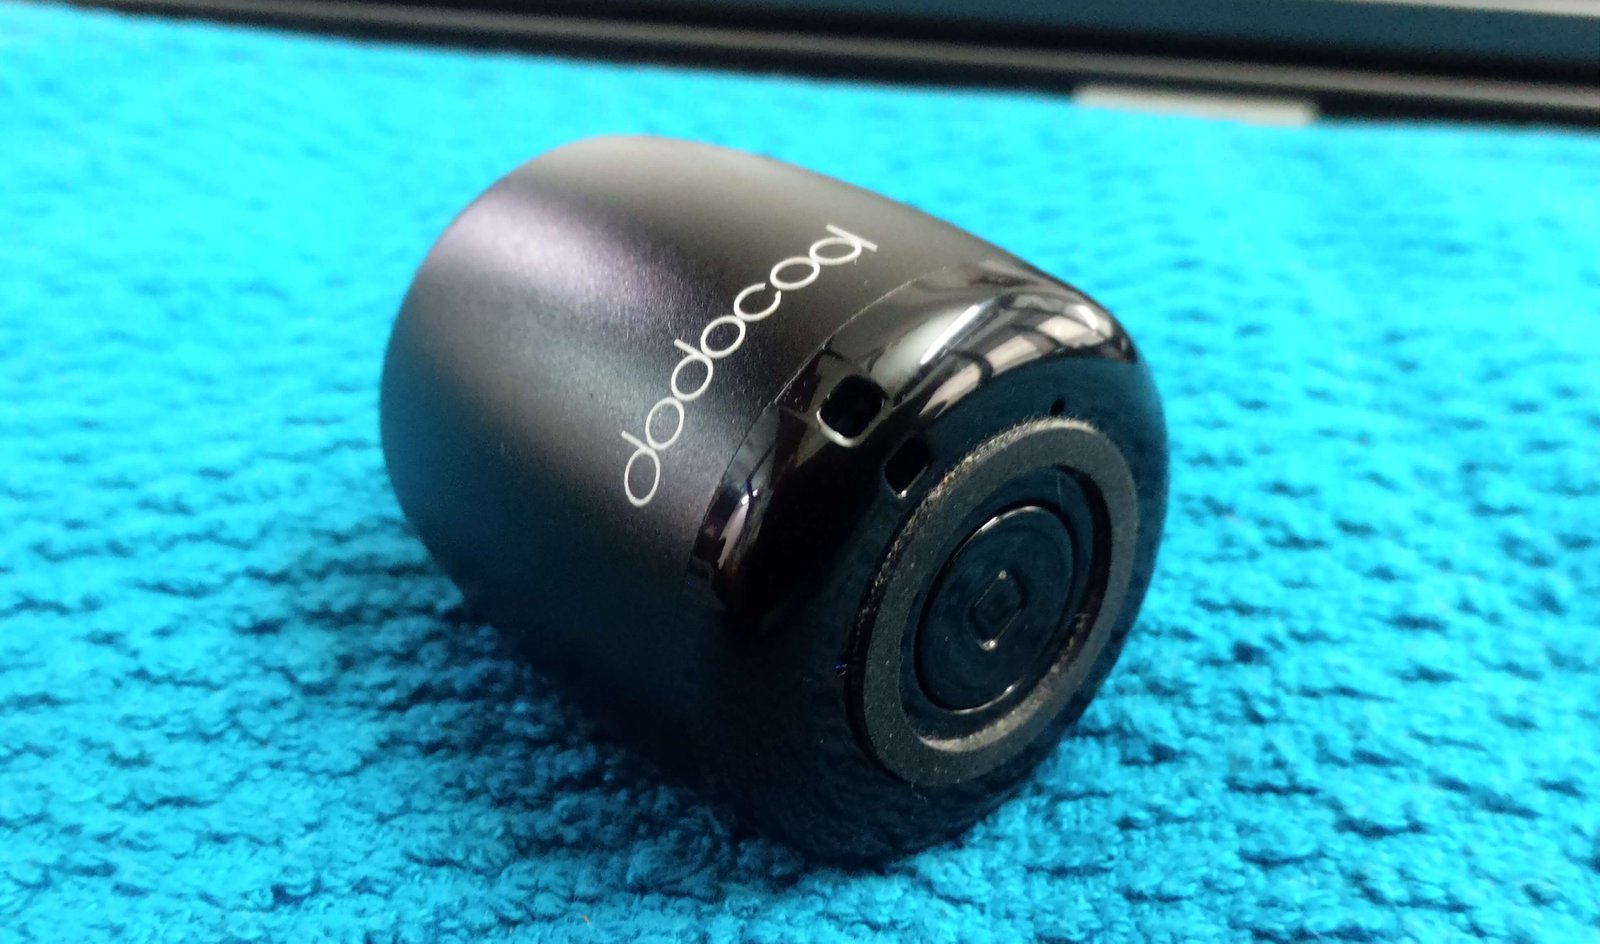 Dodocool Mini Bluetooth Speaker Review